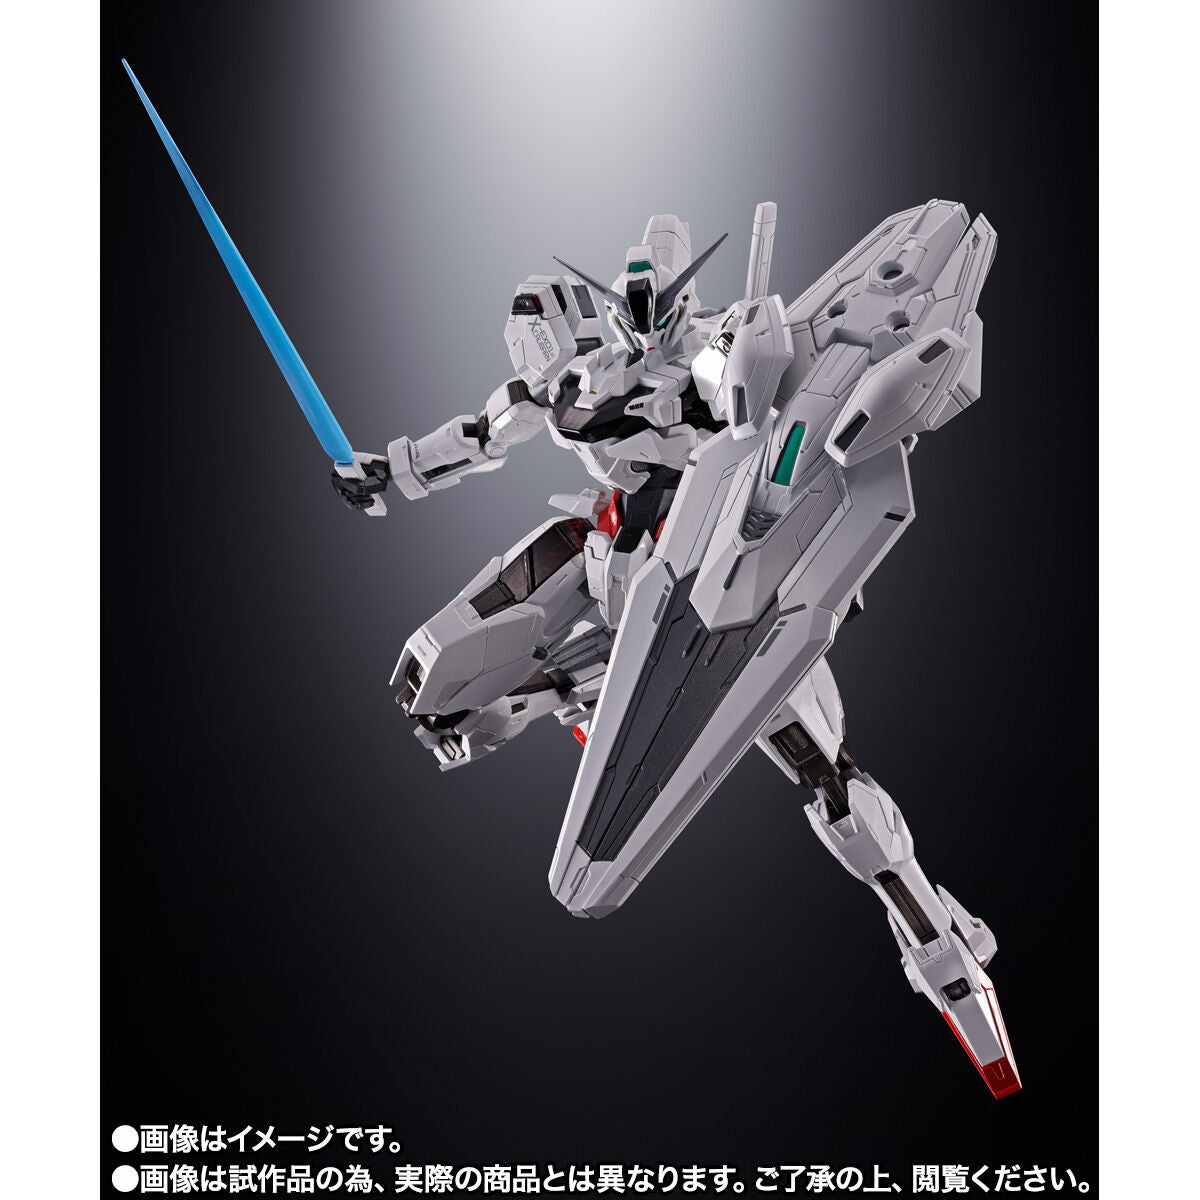 Bandai Chogokin Gundam Aerial Mobile Suit Gundam: The Witch from